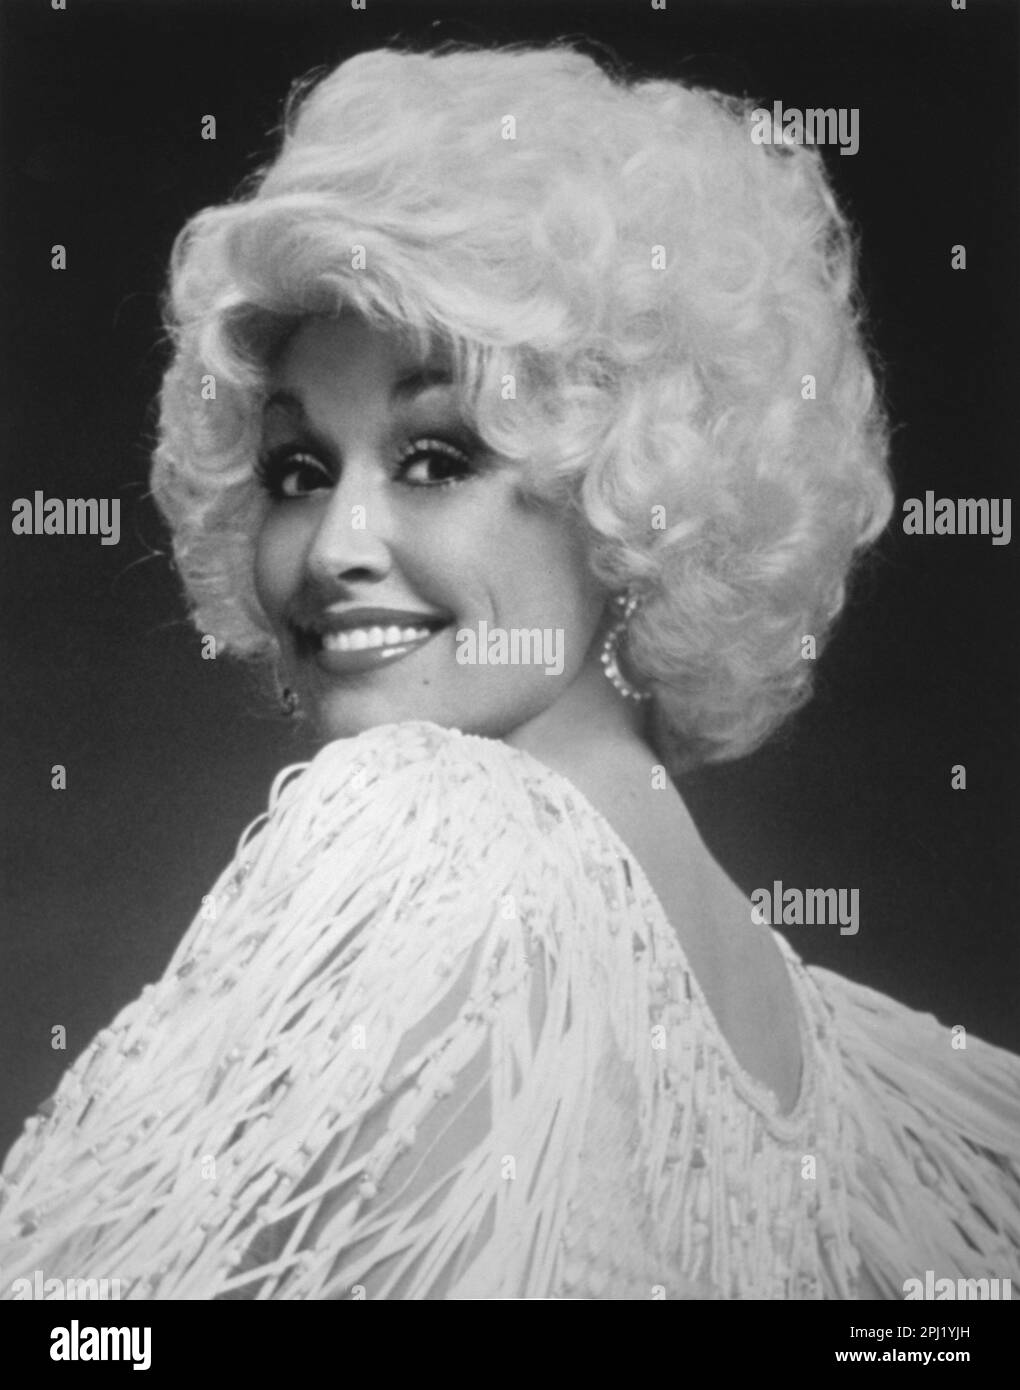 PR shot of American singer/songwriter, Dolly Parton Stock Photo